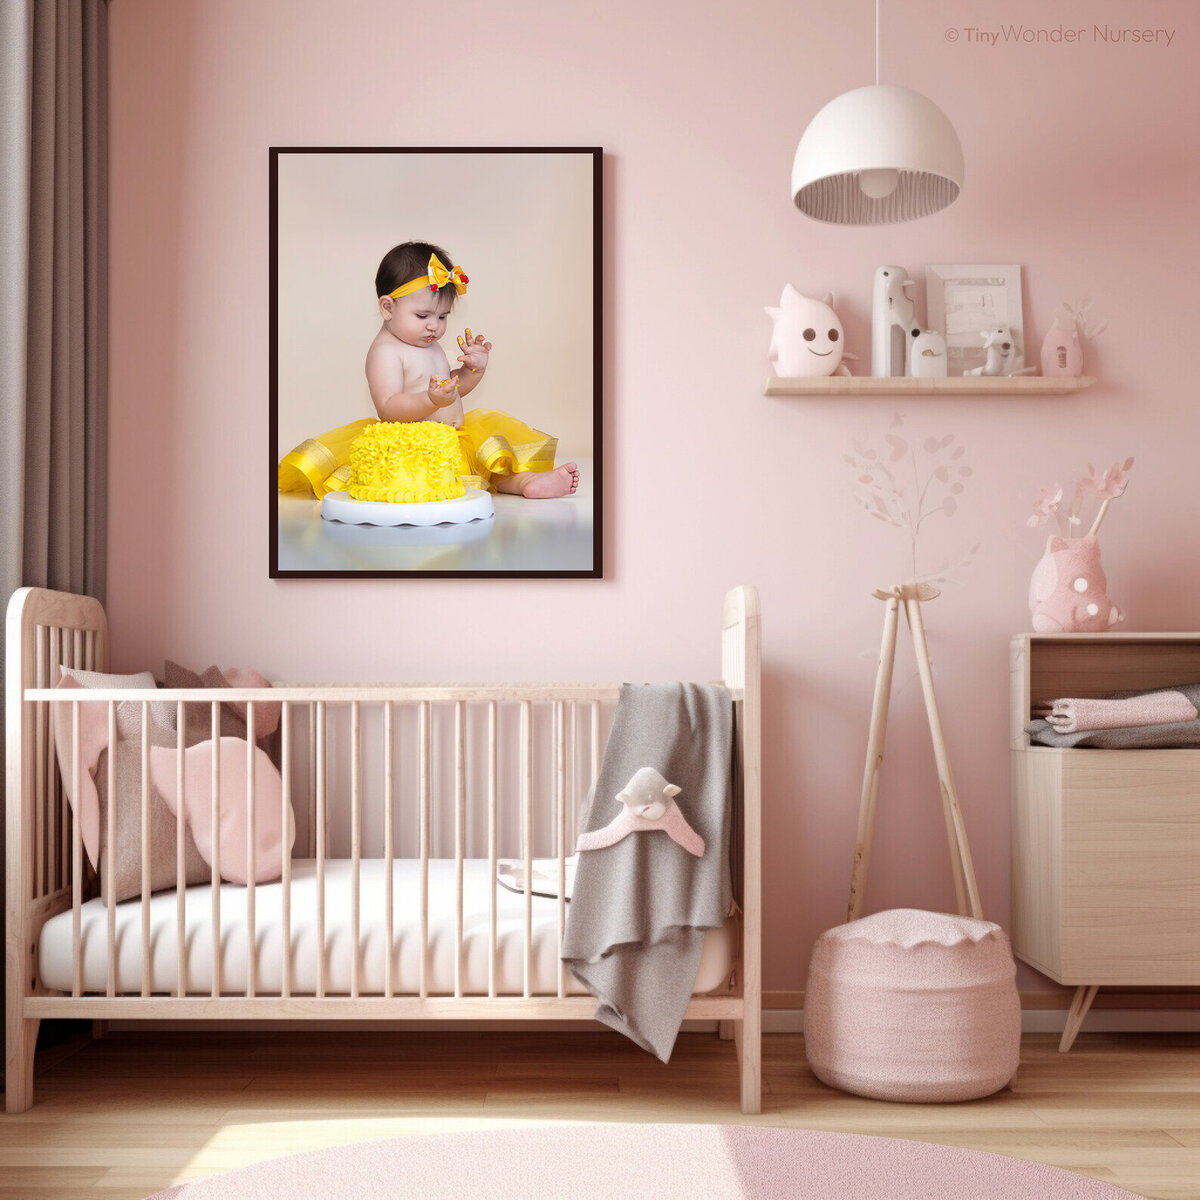 Rosie-Smash-Cake-artwork-ashlie-steinau-photography-baby-nursery